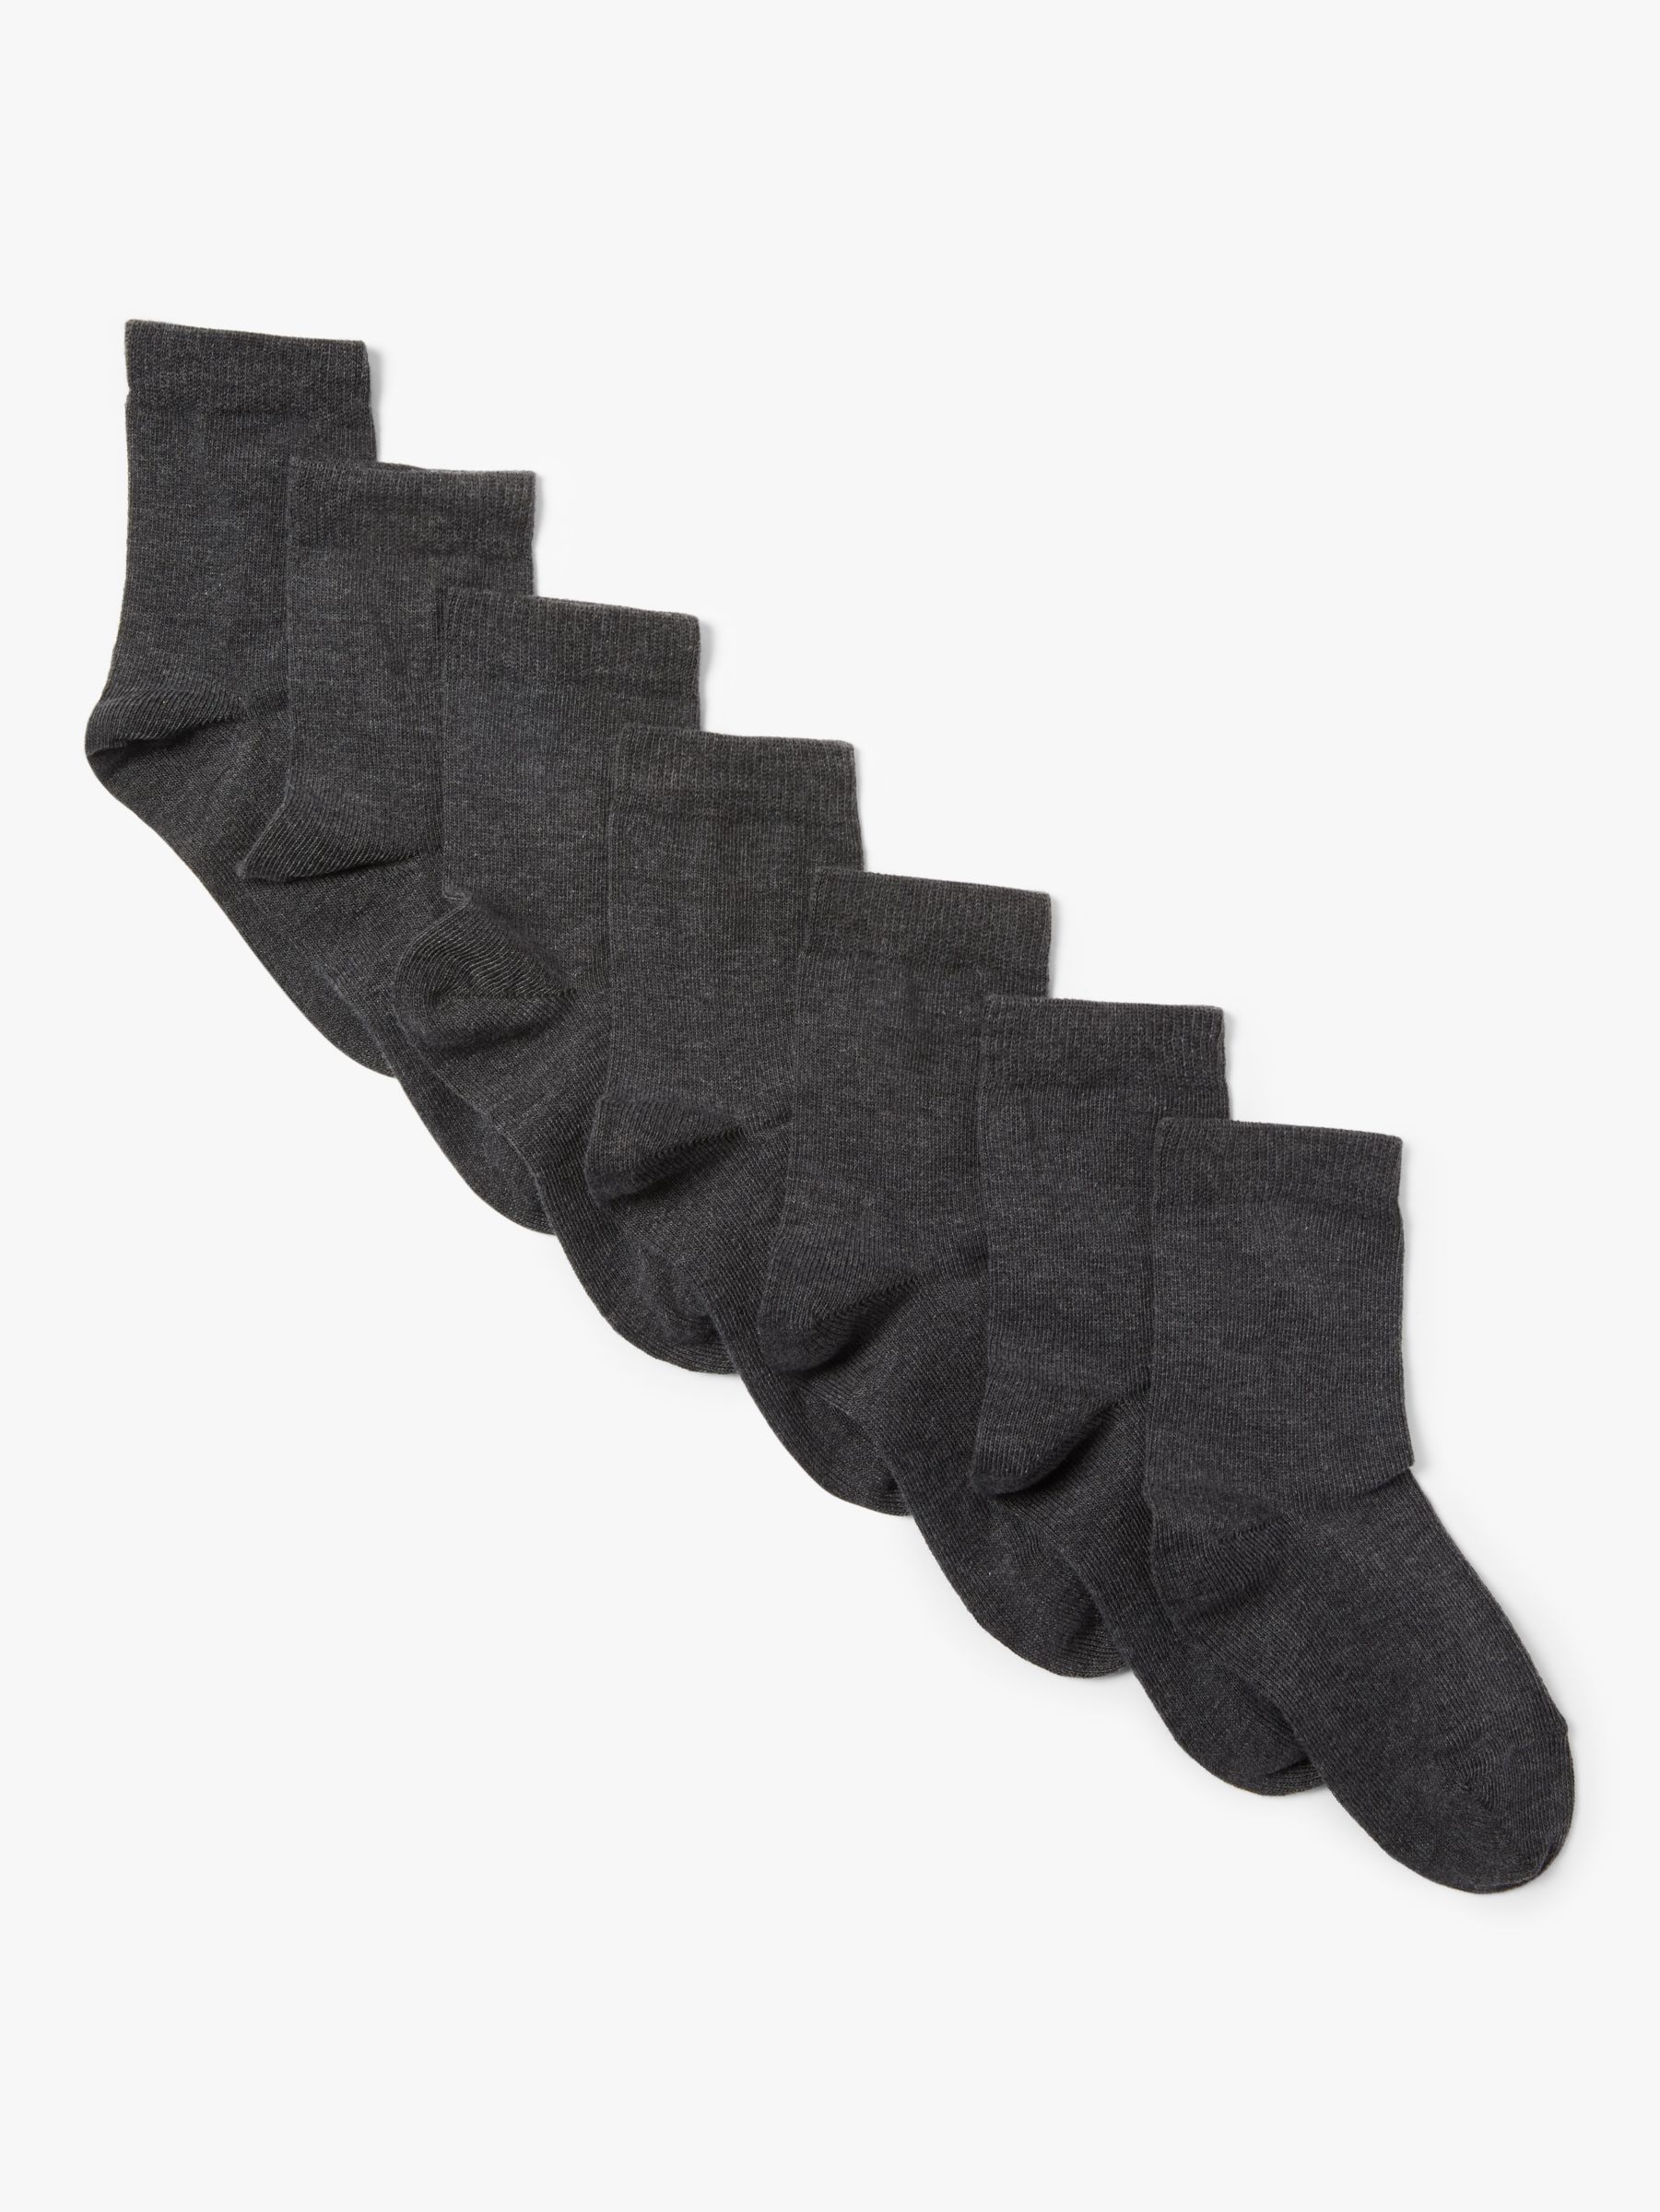 John Lewis Kids' Cotton Rich Socks, Pack of 7, Charcoal, 6-8.5 Jnr